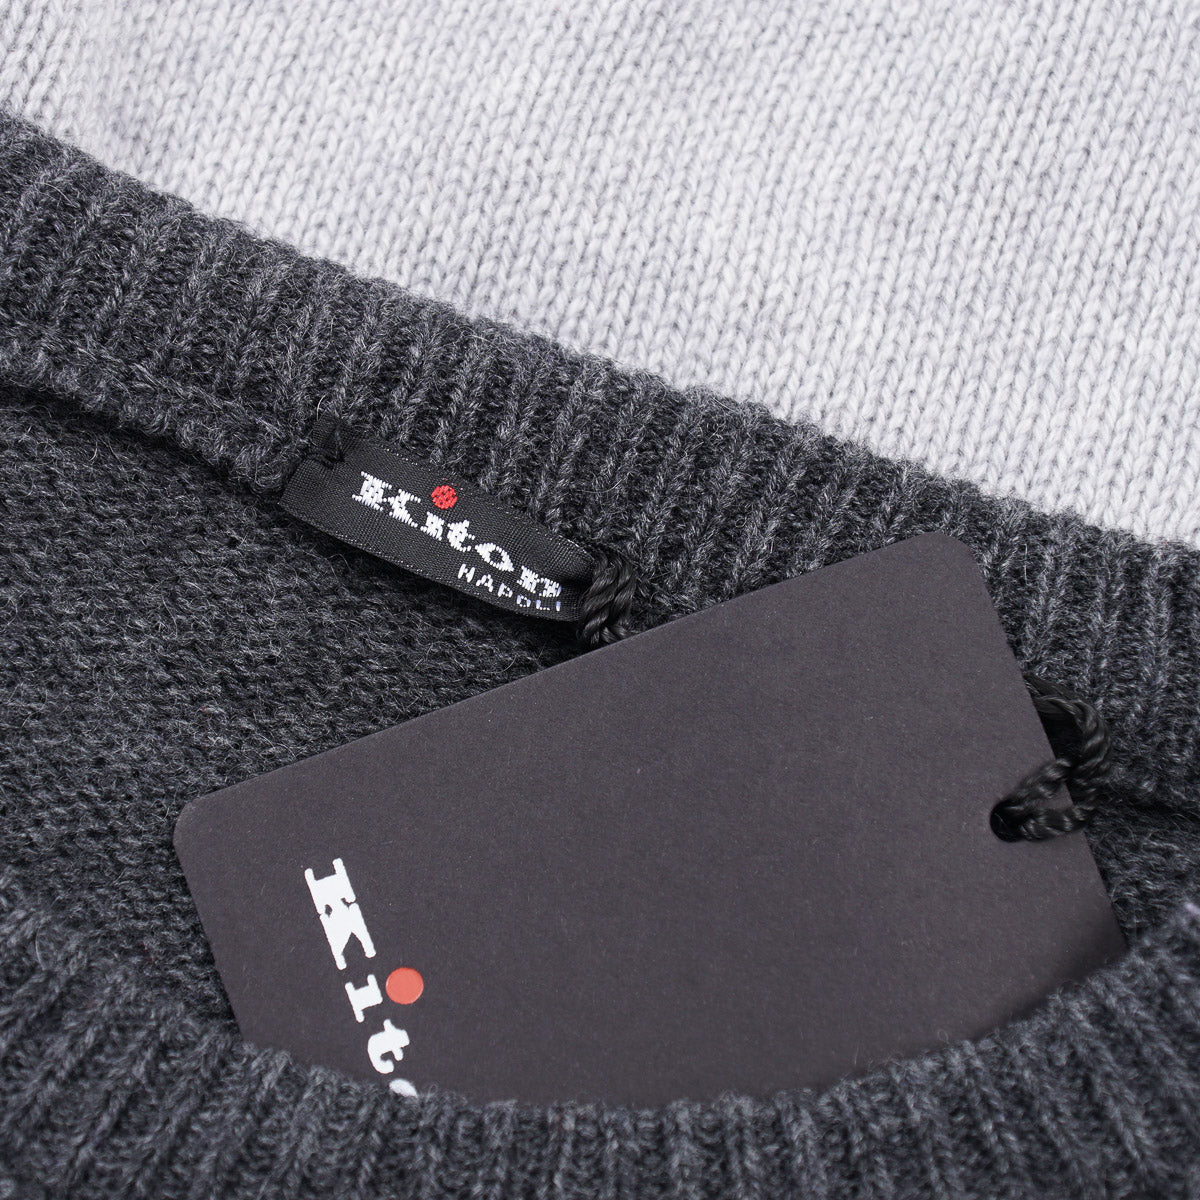 Kiton Intarsia Knit Cashmere Sweater - Top Shelf Apparel